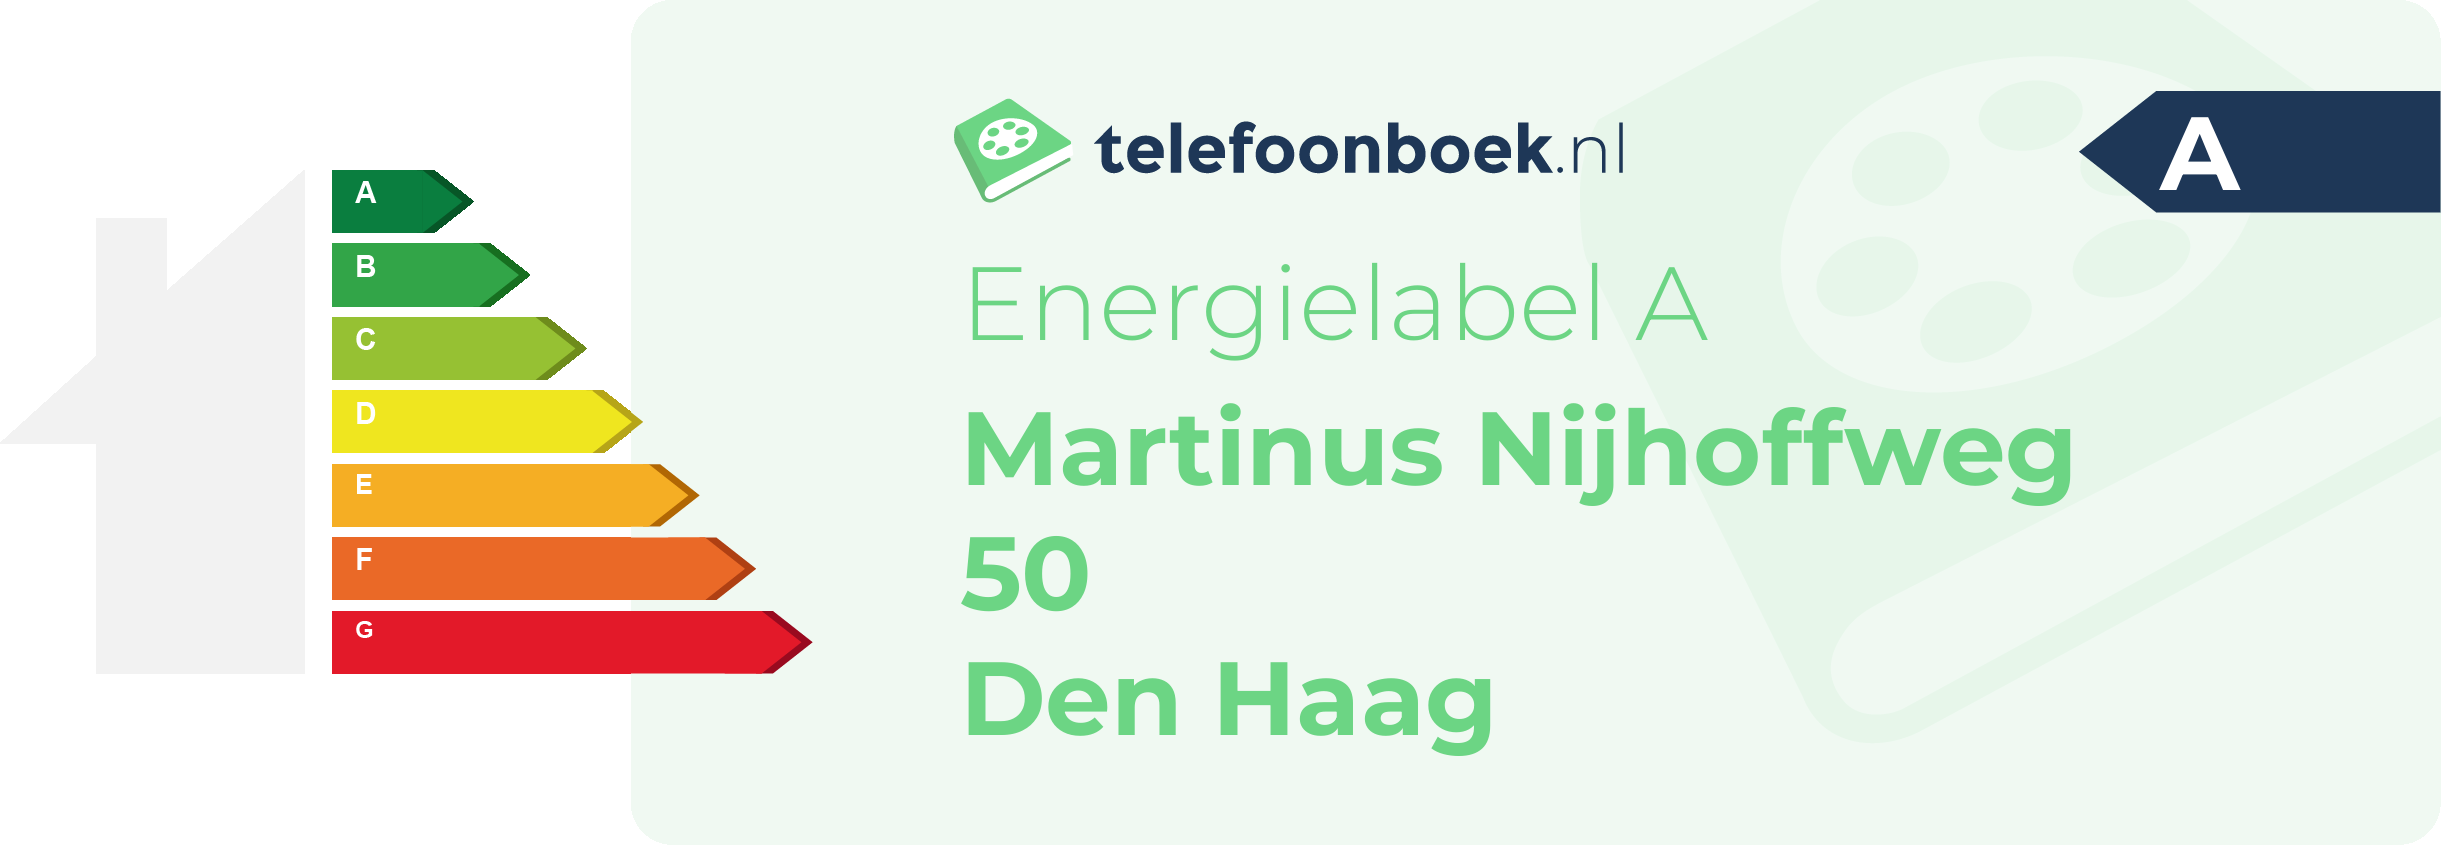 Energielabel Martinus Nijhoffweg 50 Den Haag